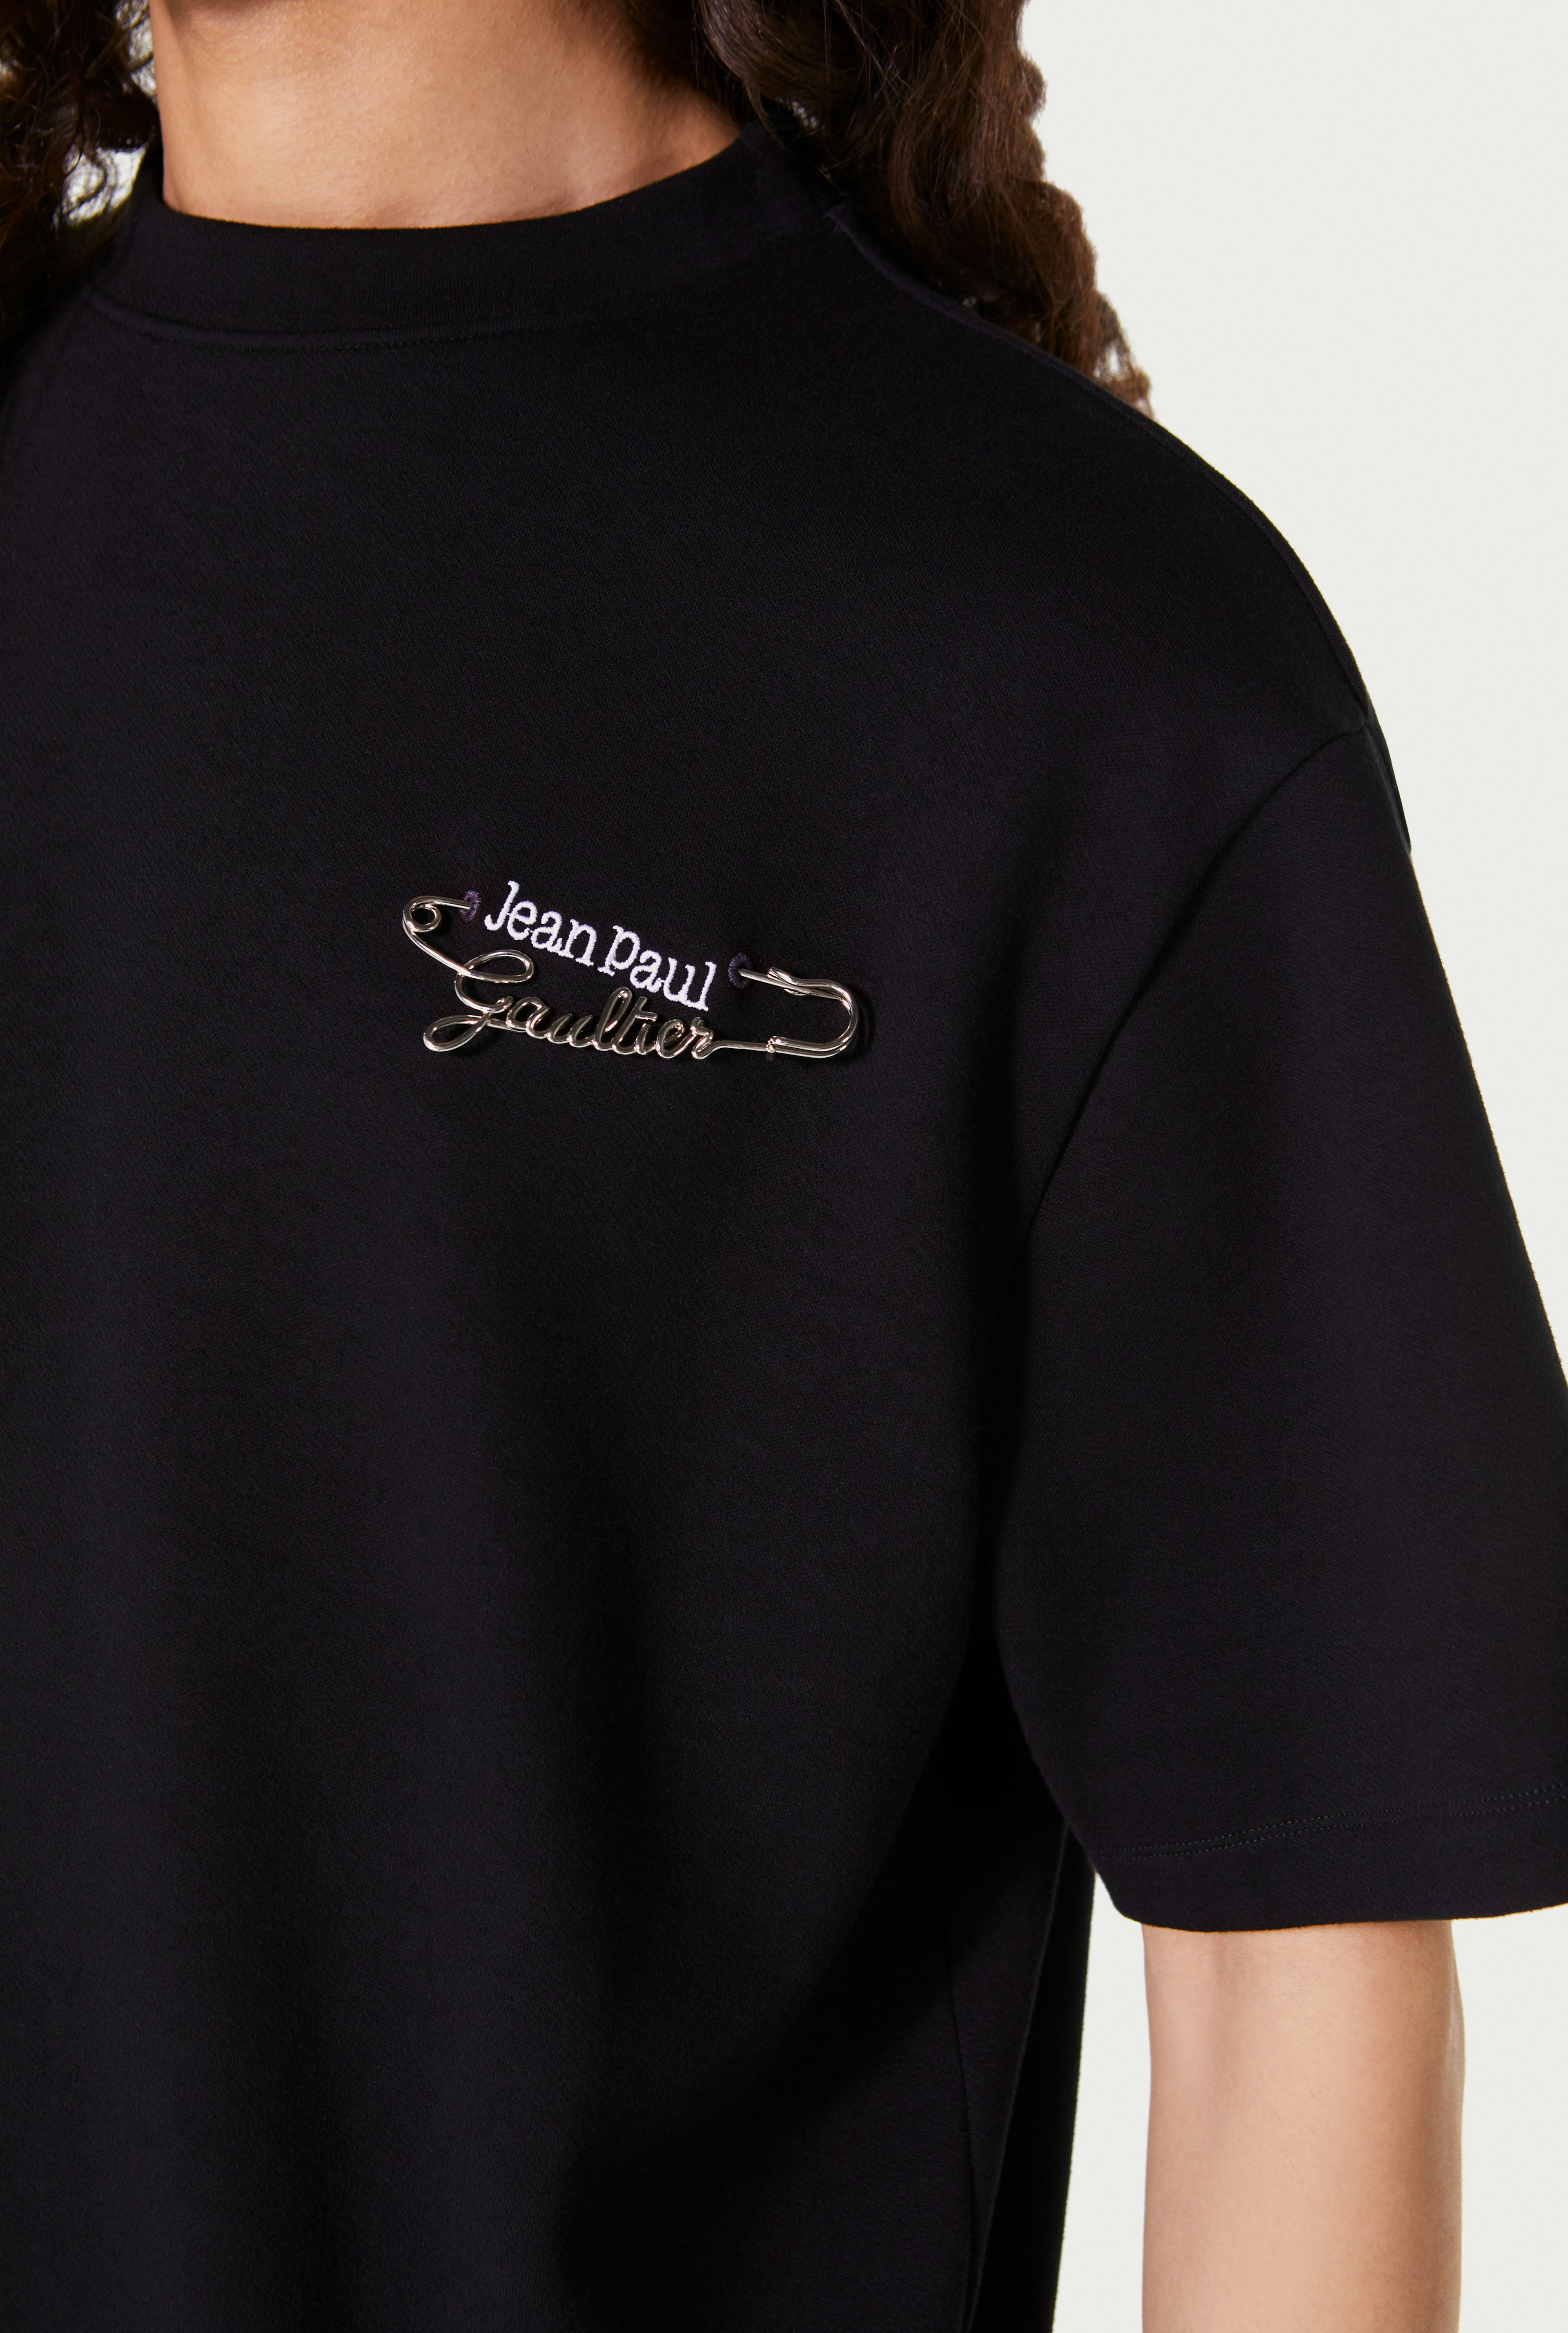 The Brooch T-shirt Jean Paul Gaultier